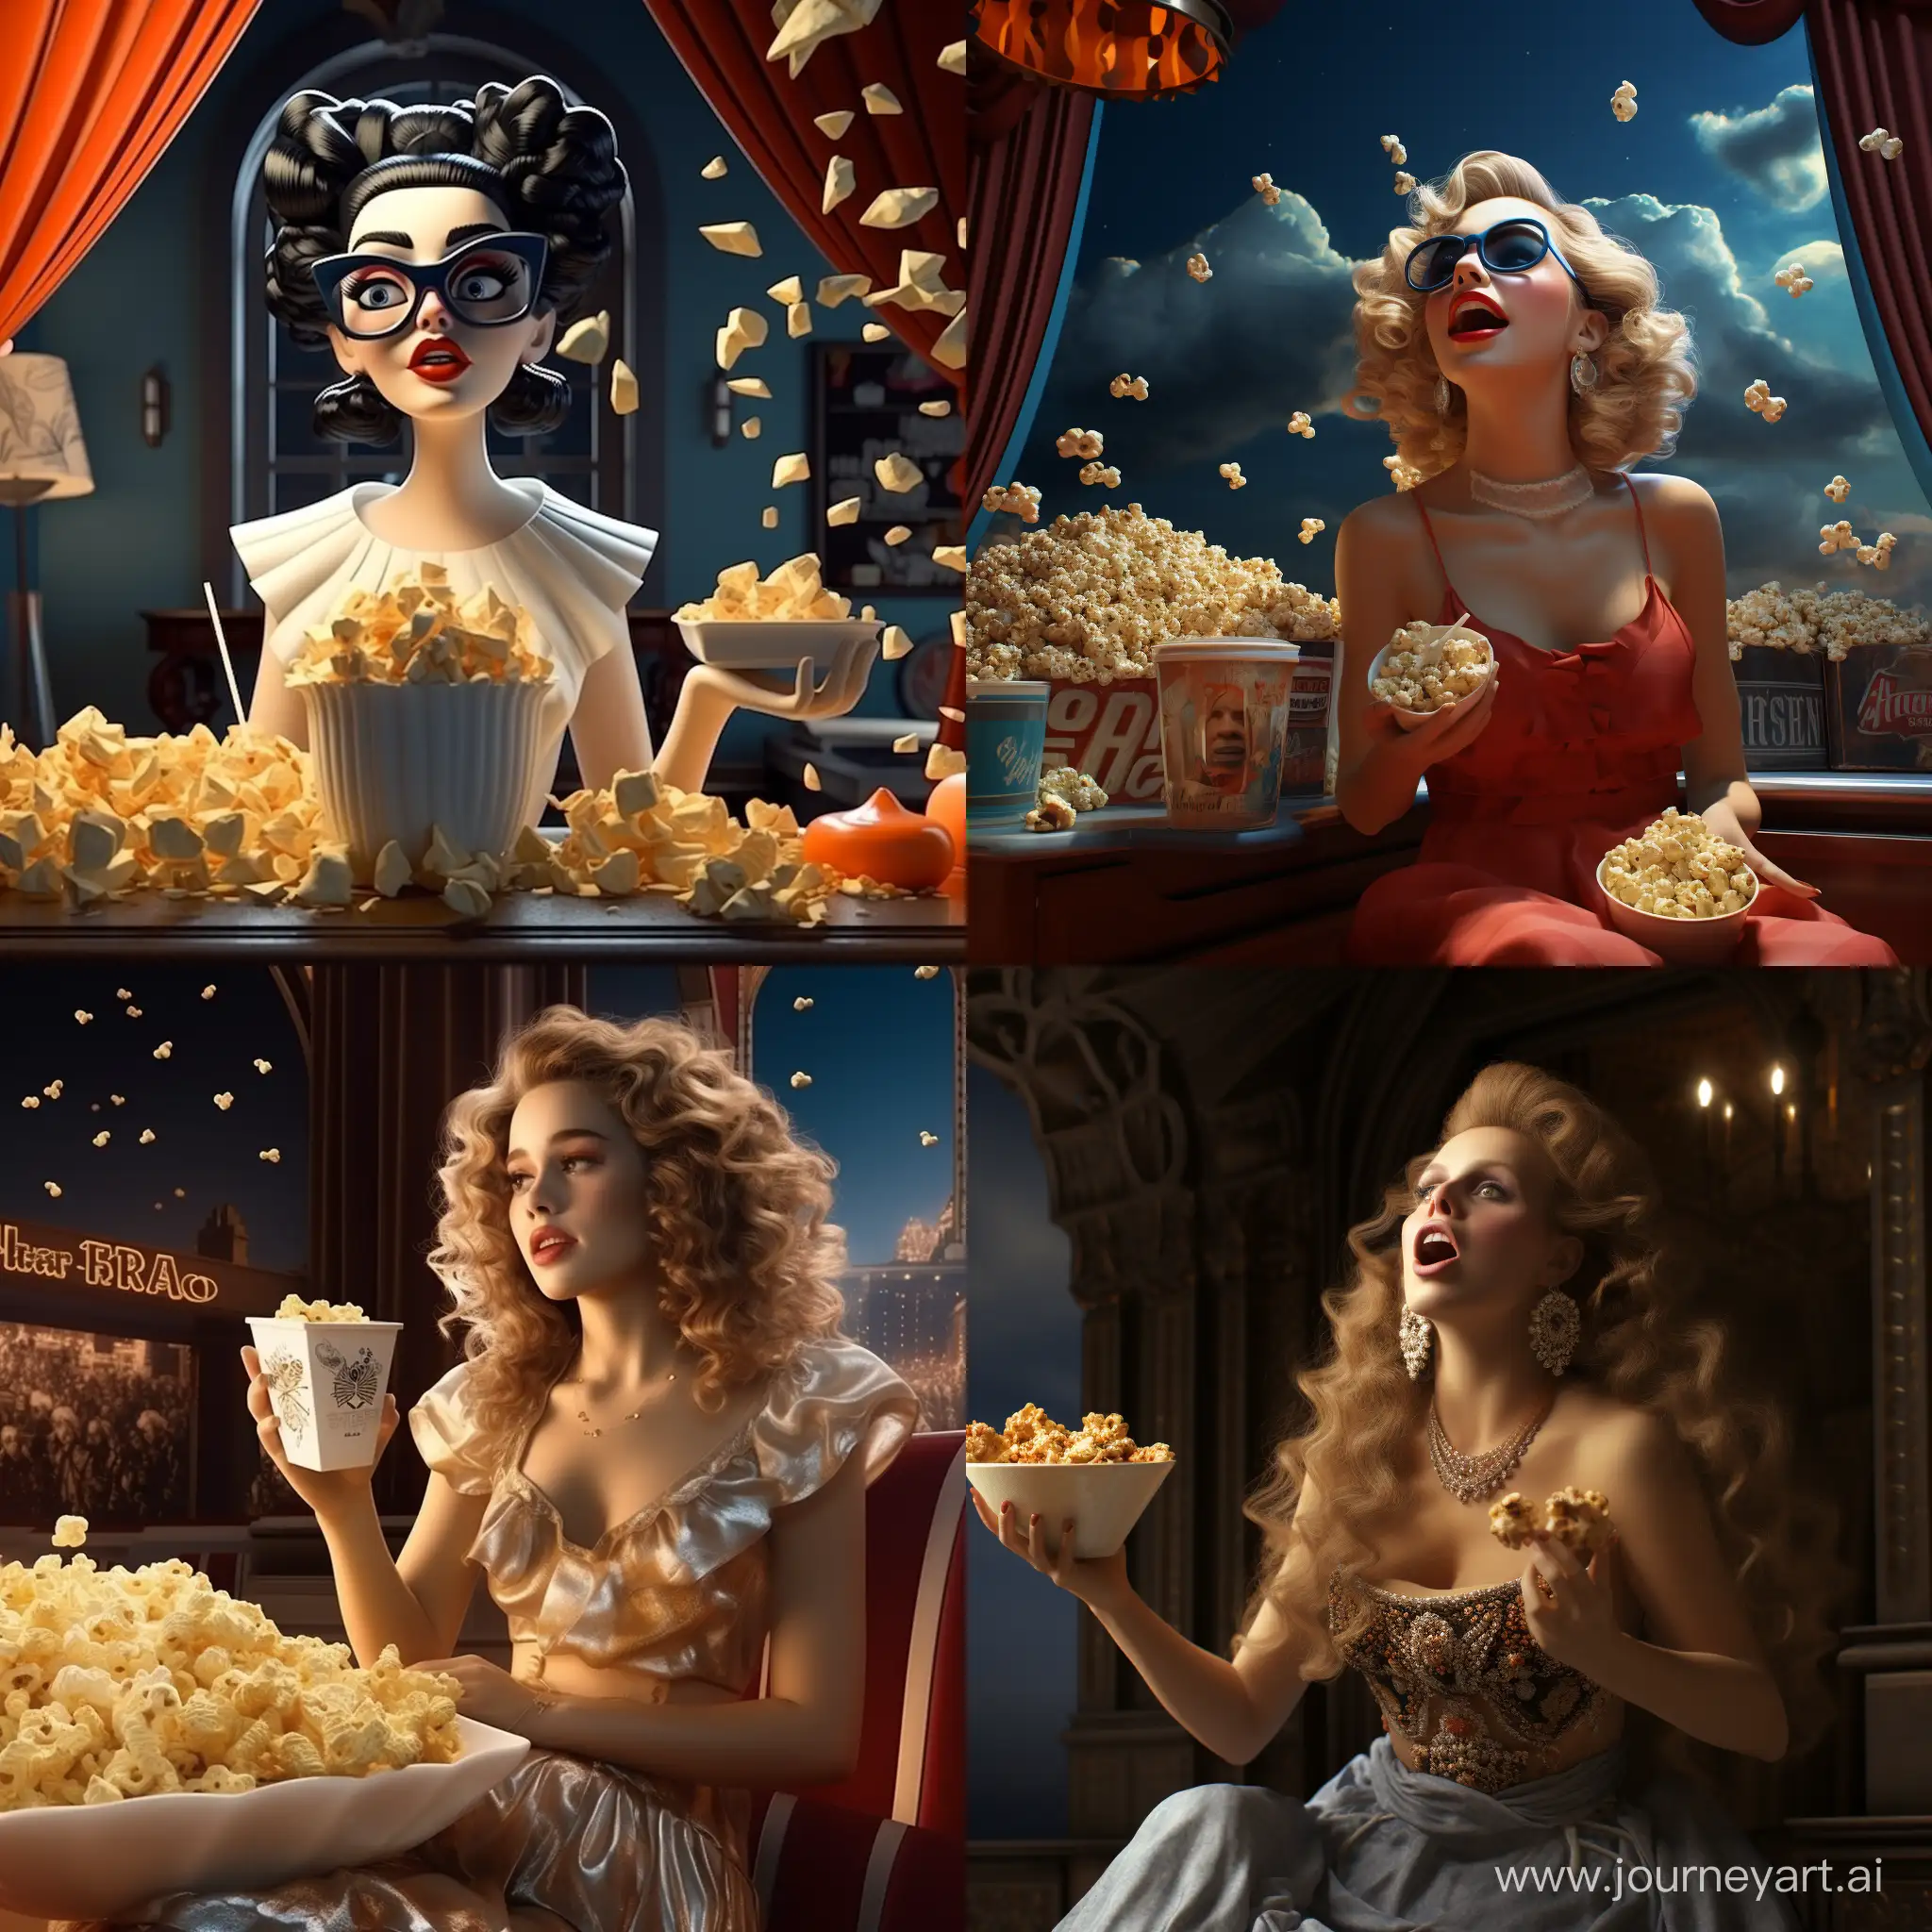 Elegant-Woman-Enjoying-Opera-with-Popcorn-in-3D-Animation